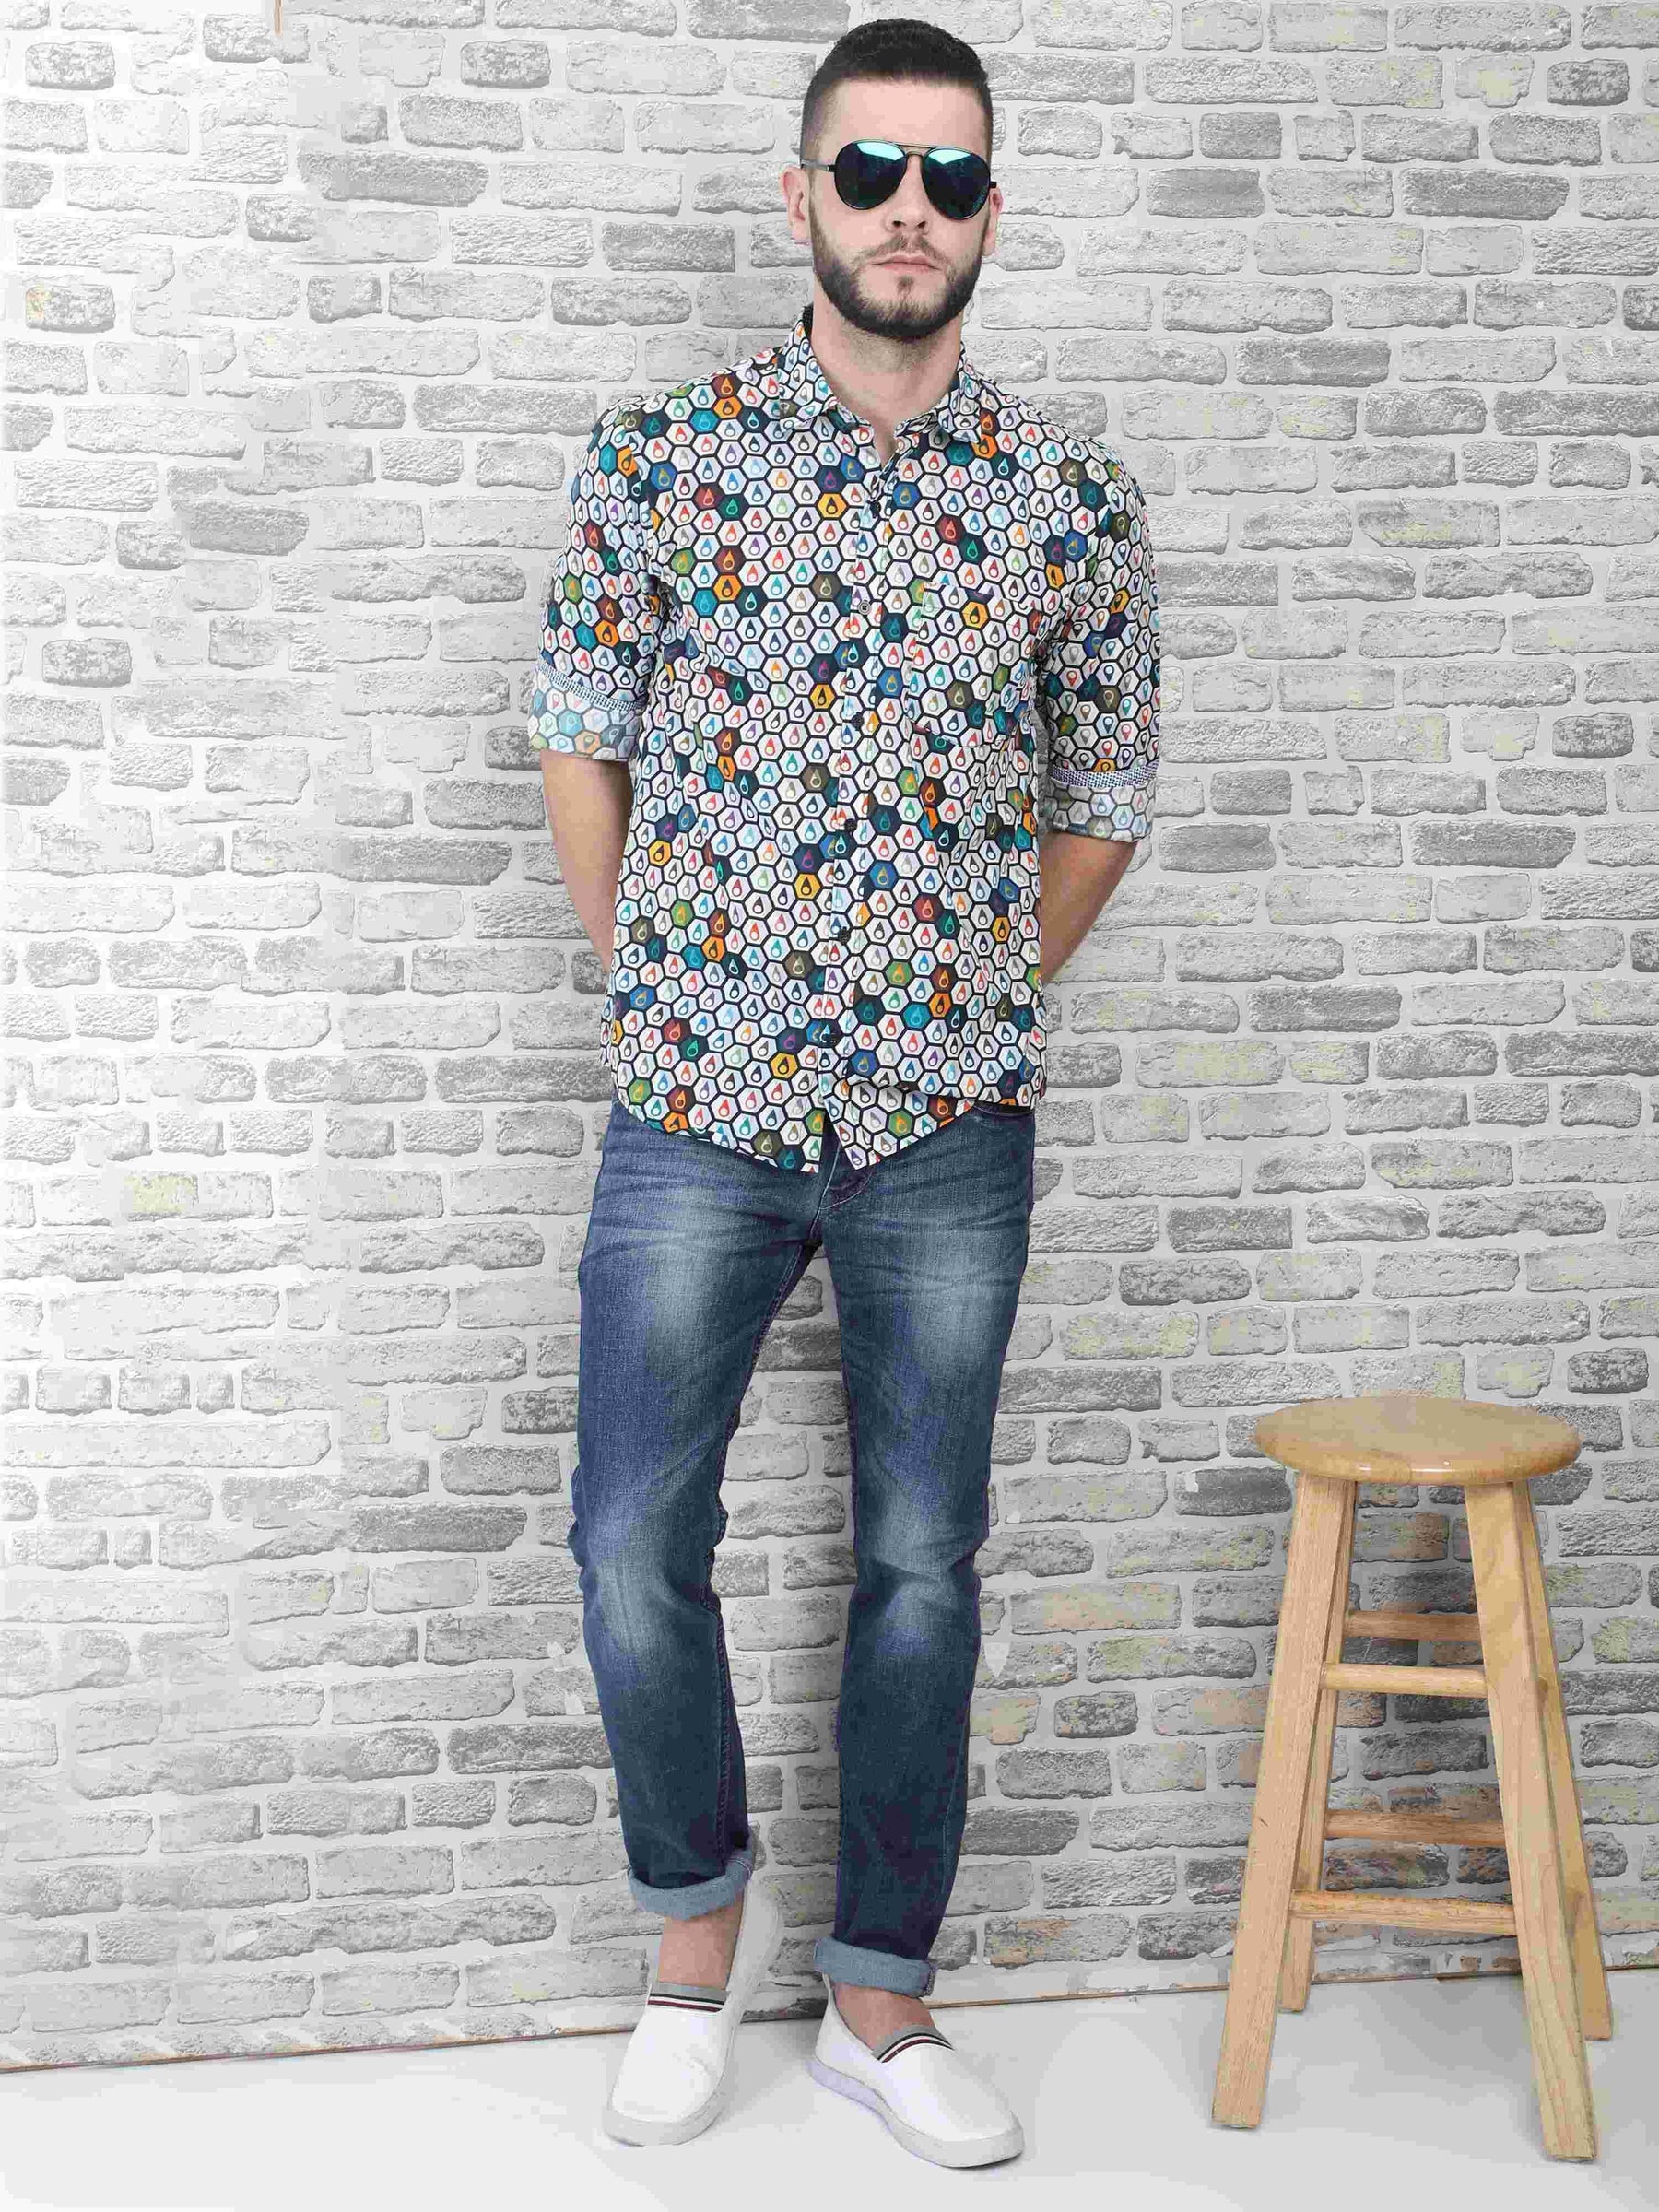 Hexagon Men's Printed Casual Shirt - Guniaa Fashions